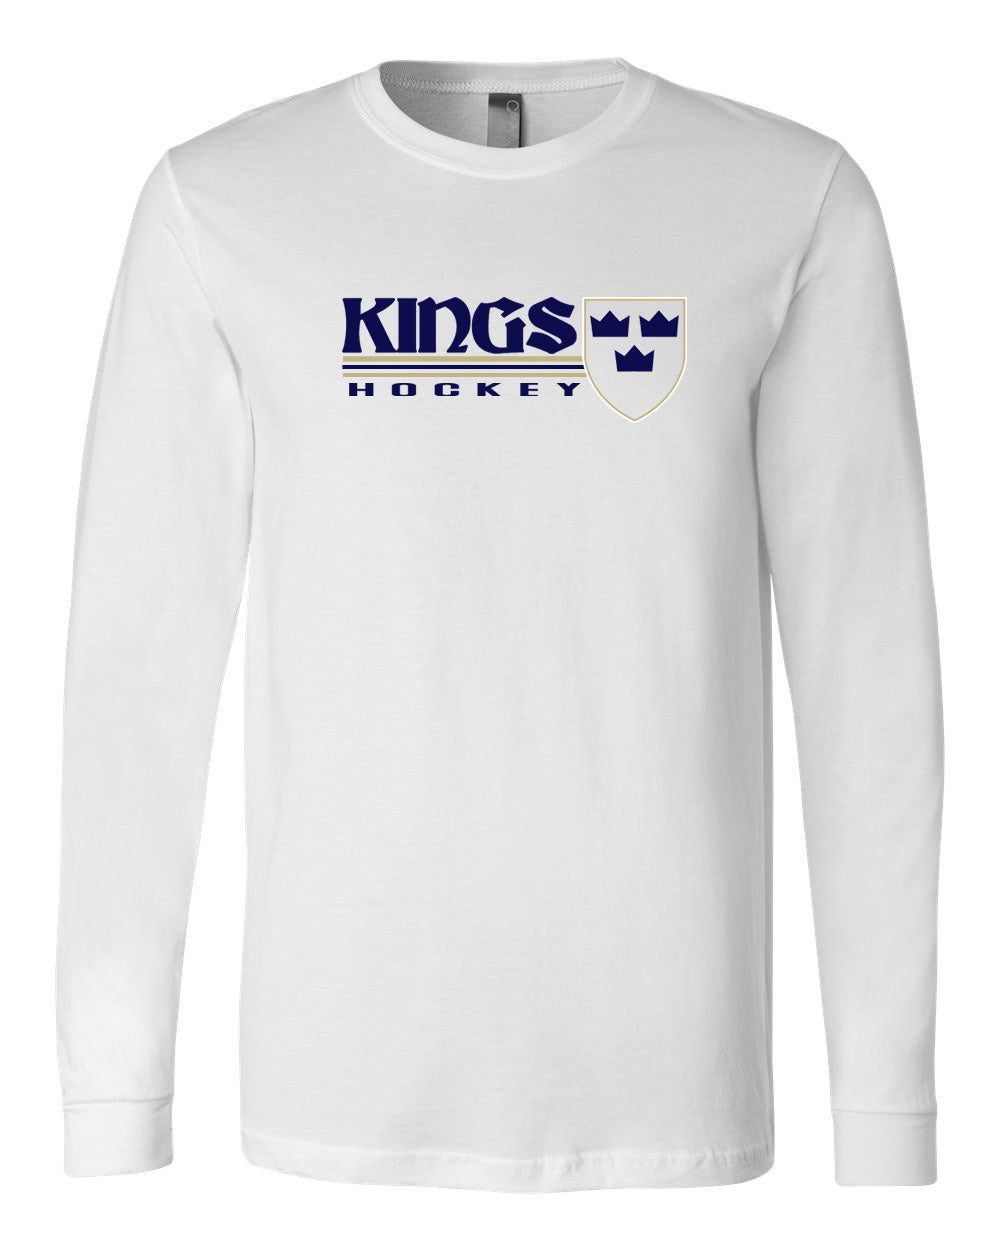 Kings Hockey Design 3 Long Sleeve Shirt